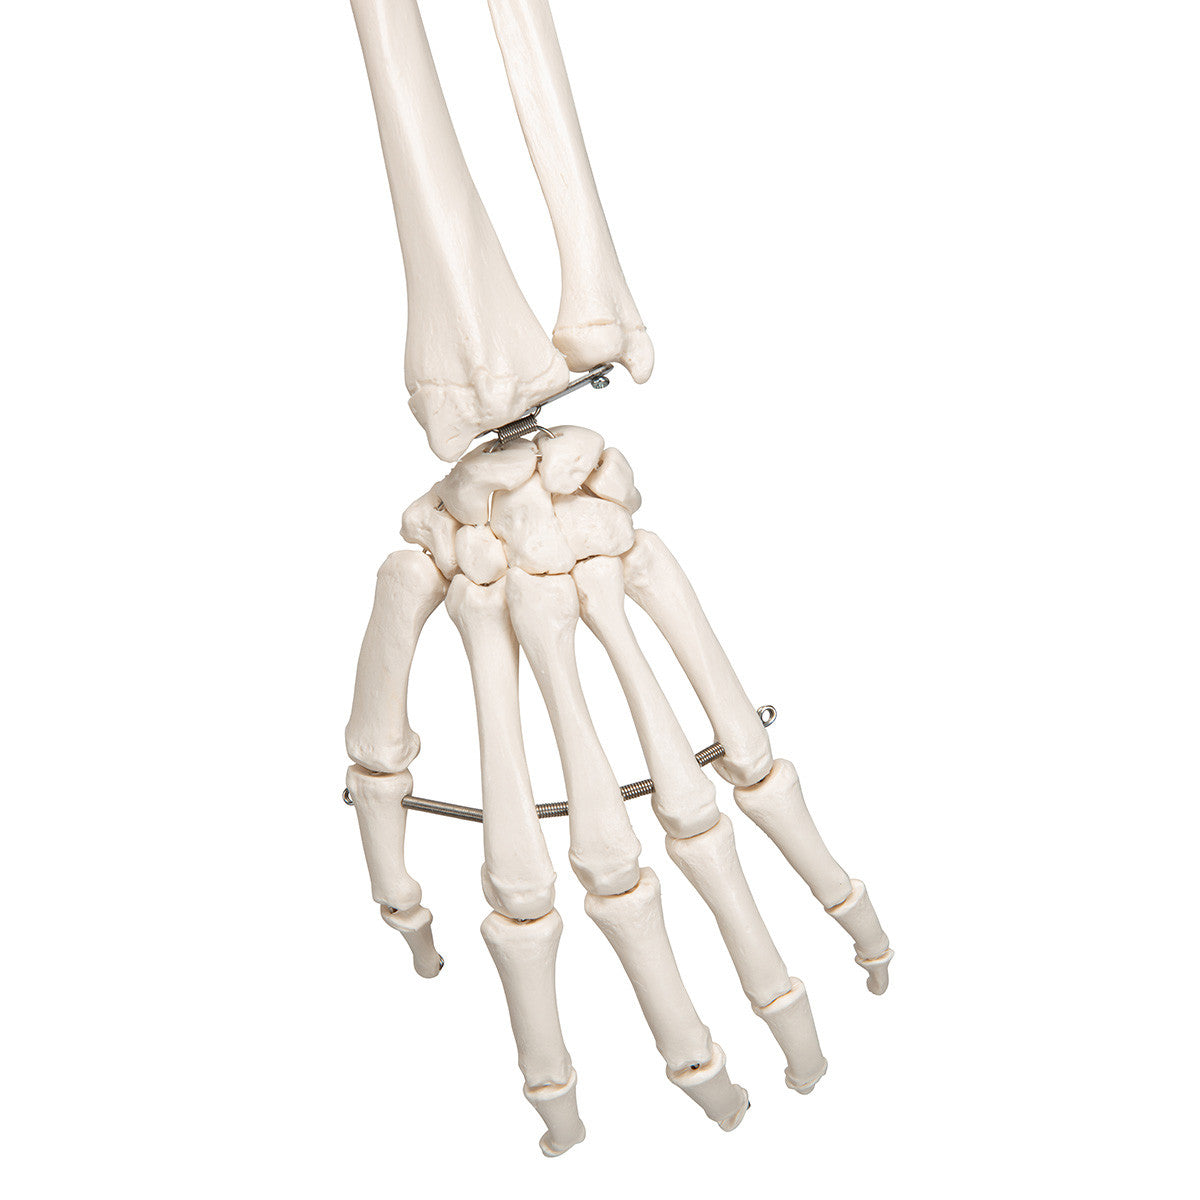 A10_05_1200_1200_Human-Skeleton-Model-Stan-3B-Smart-Anatomy__14945.1603562778.1280.1280.jpg